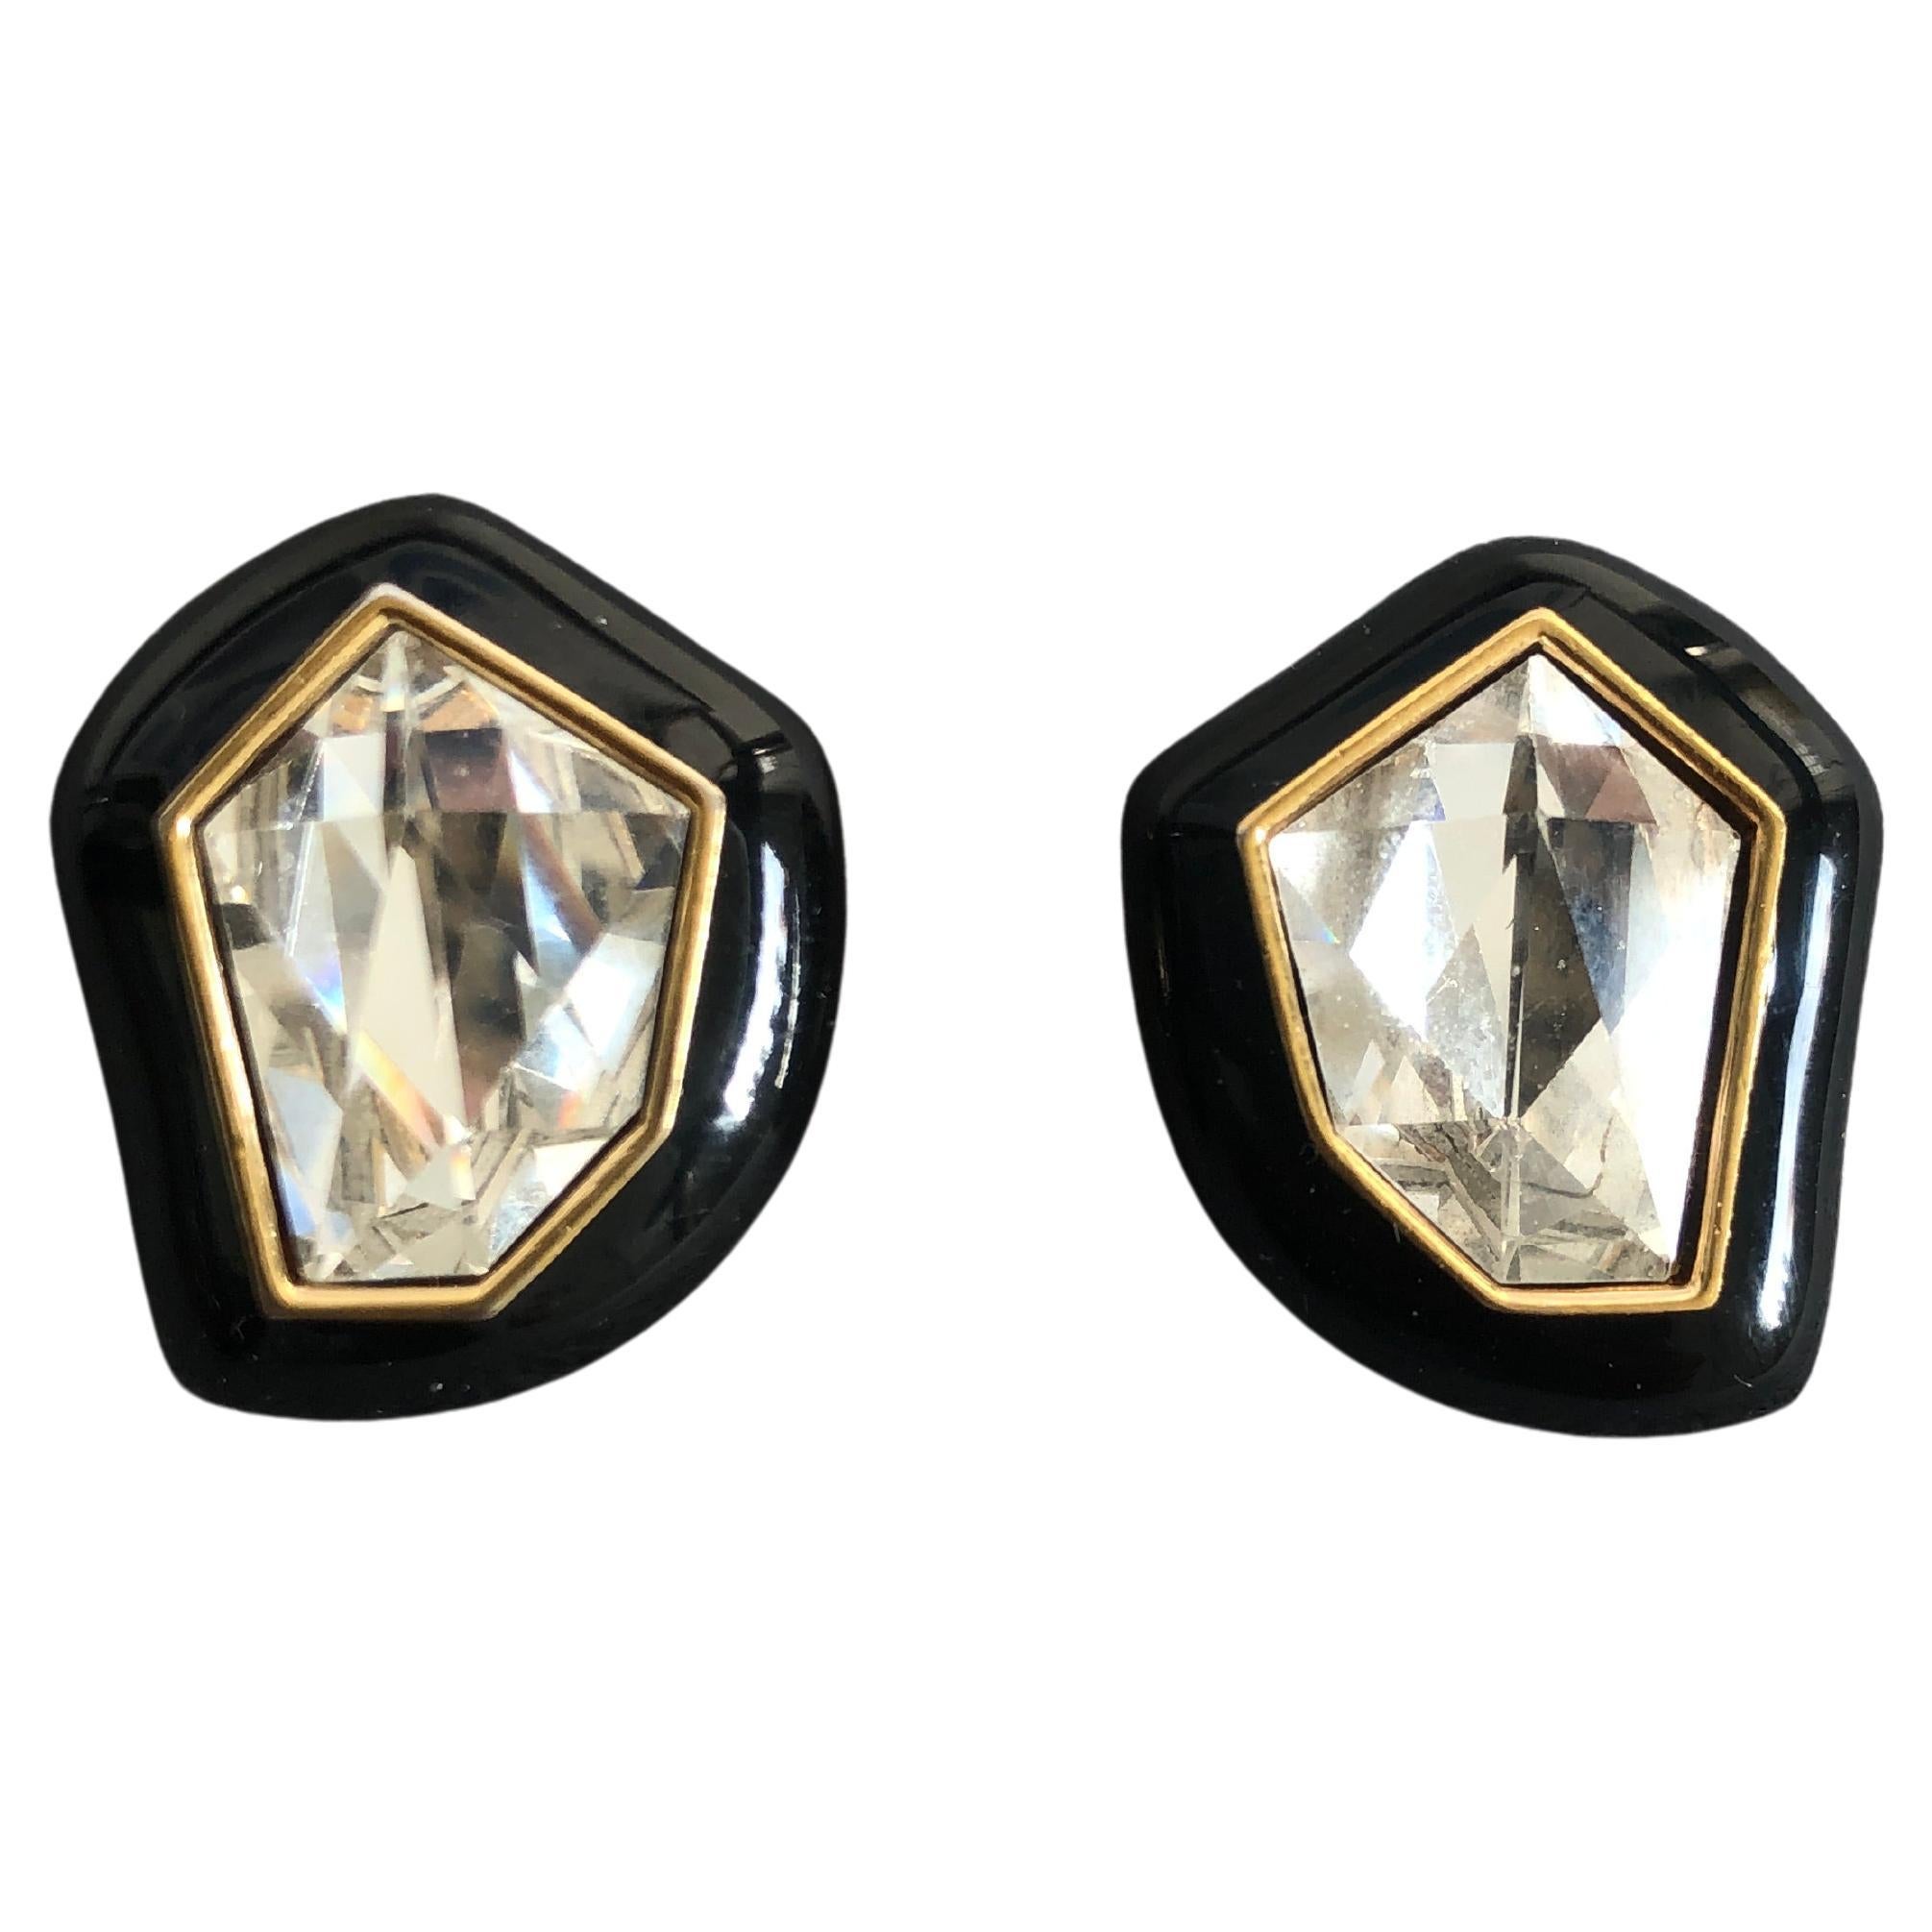 Pair of Vintage Modernist Glam Clip Earrings by Daniel Swarovski  For Sale